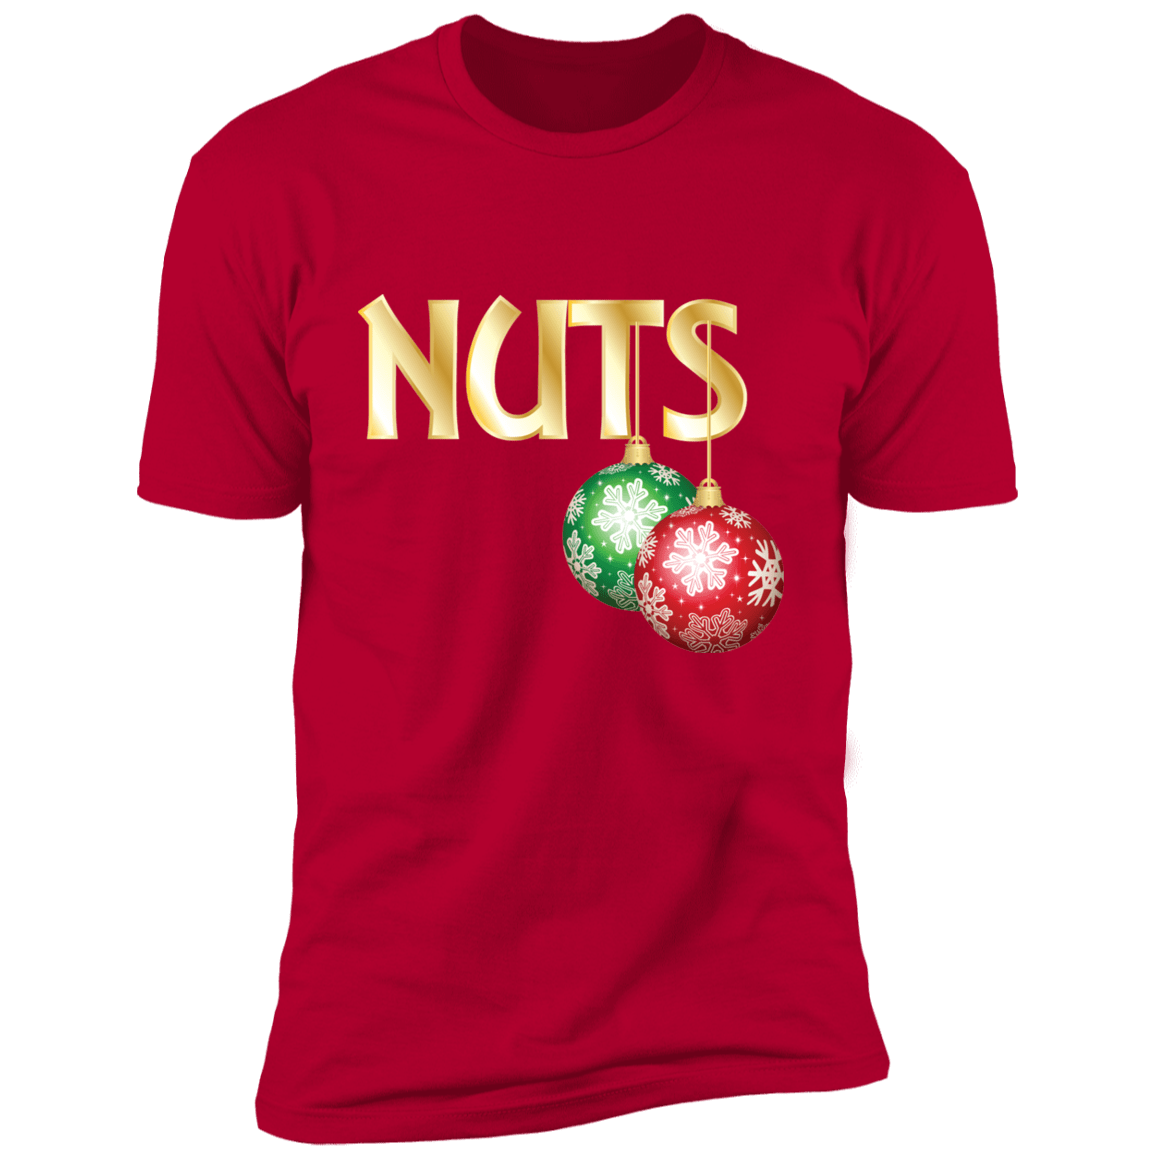 Nuts (6097028972716)